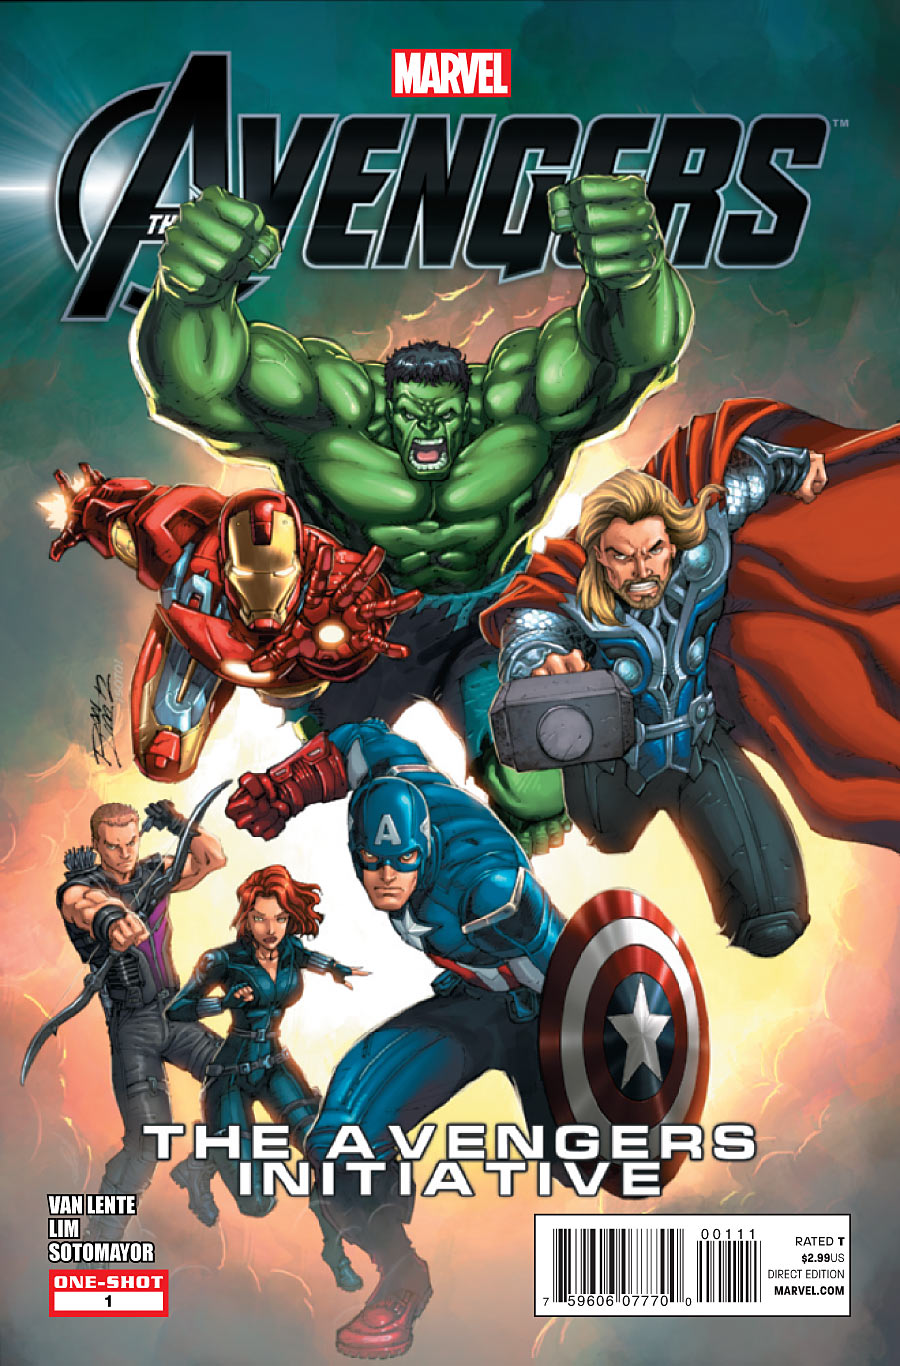 Avengers: The Initiative #19